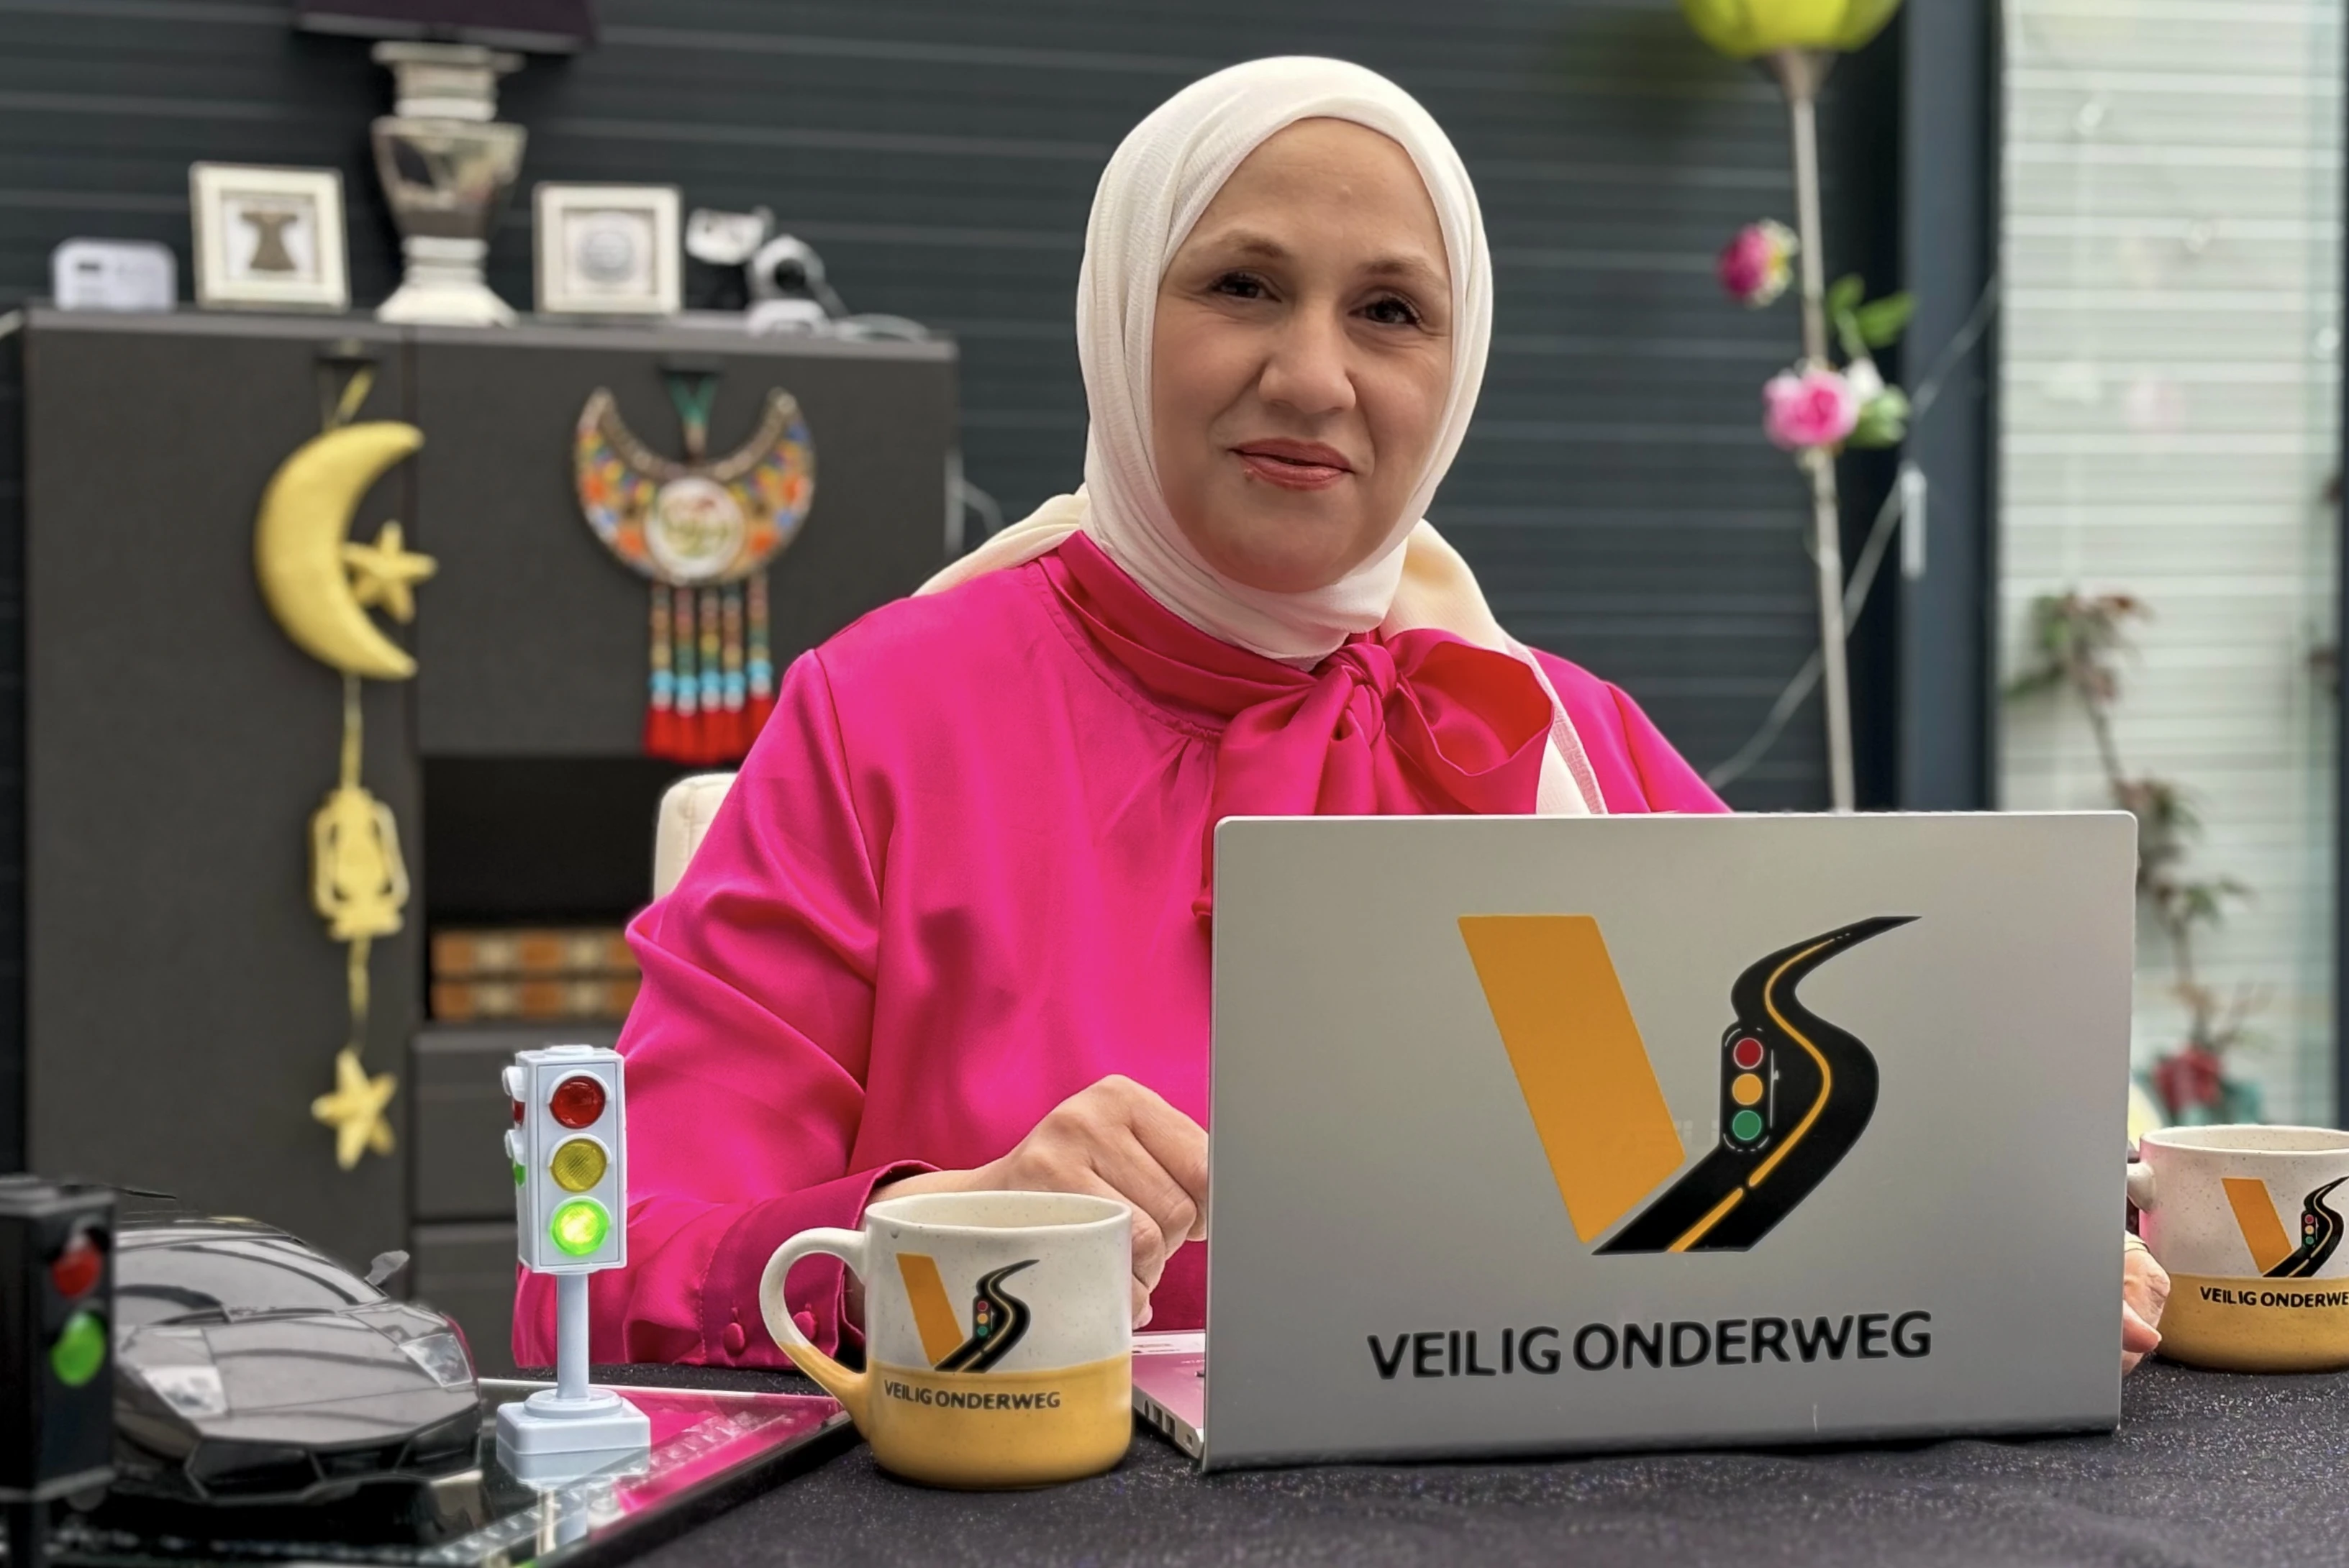 Лубна Базарбаши открыла свою школу занятий по теории вождения - 'Veilig Onderweg'. Лубна за компьютером.